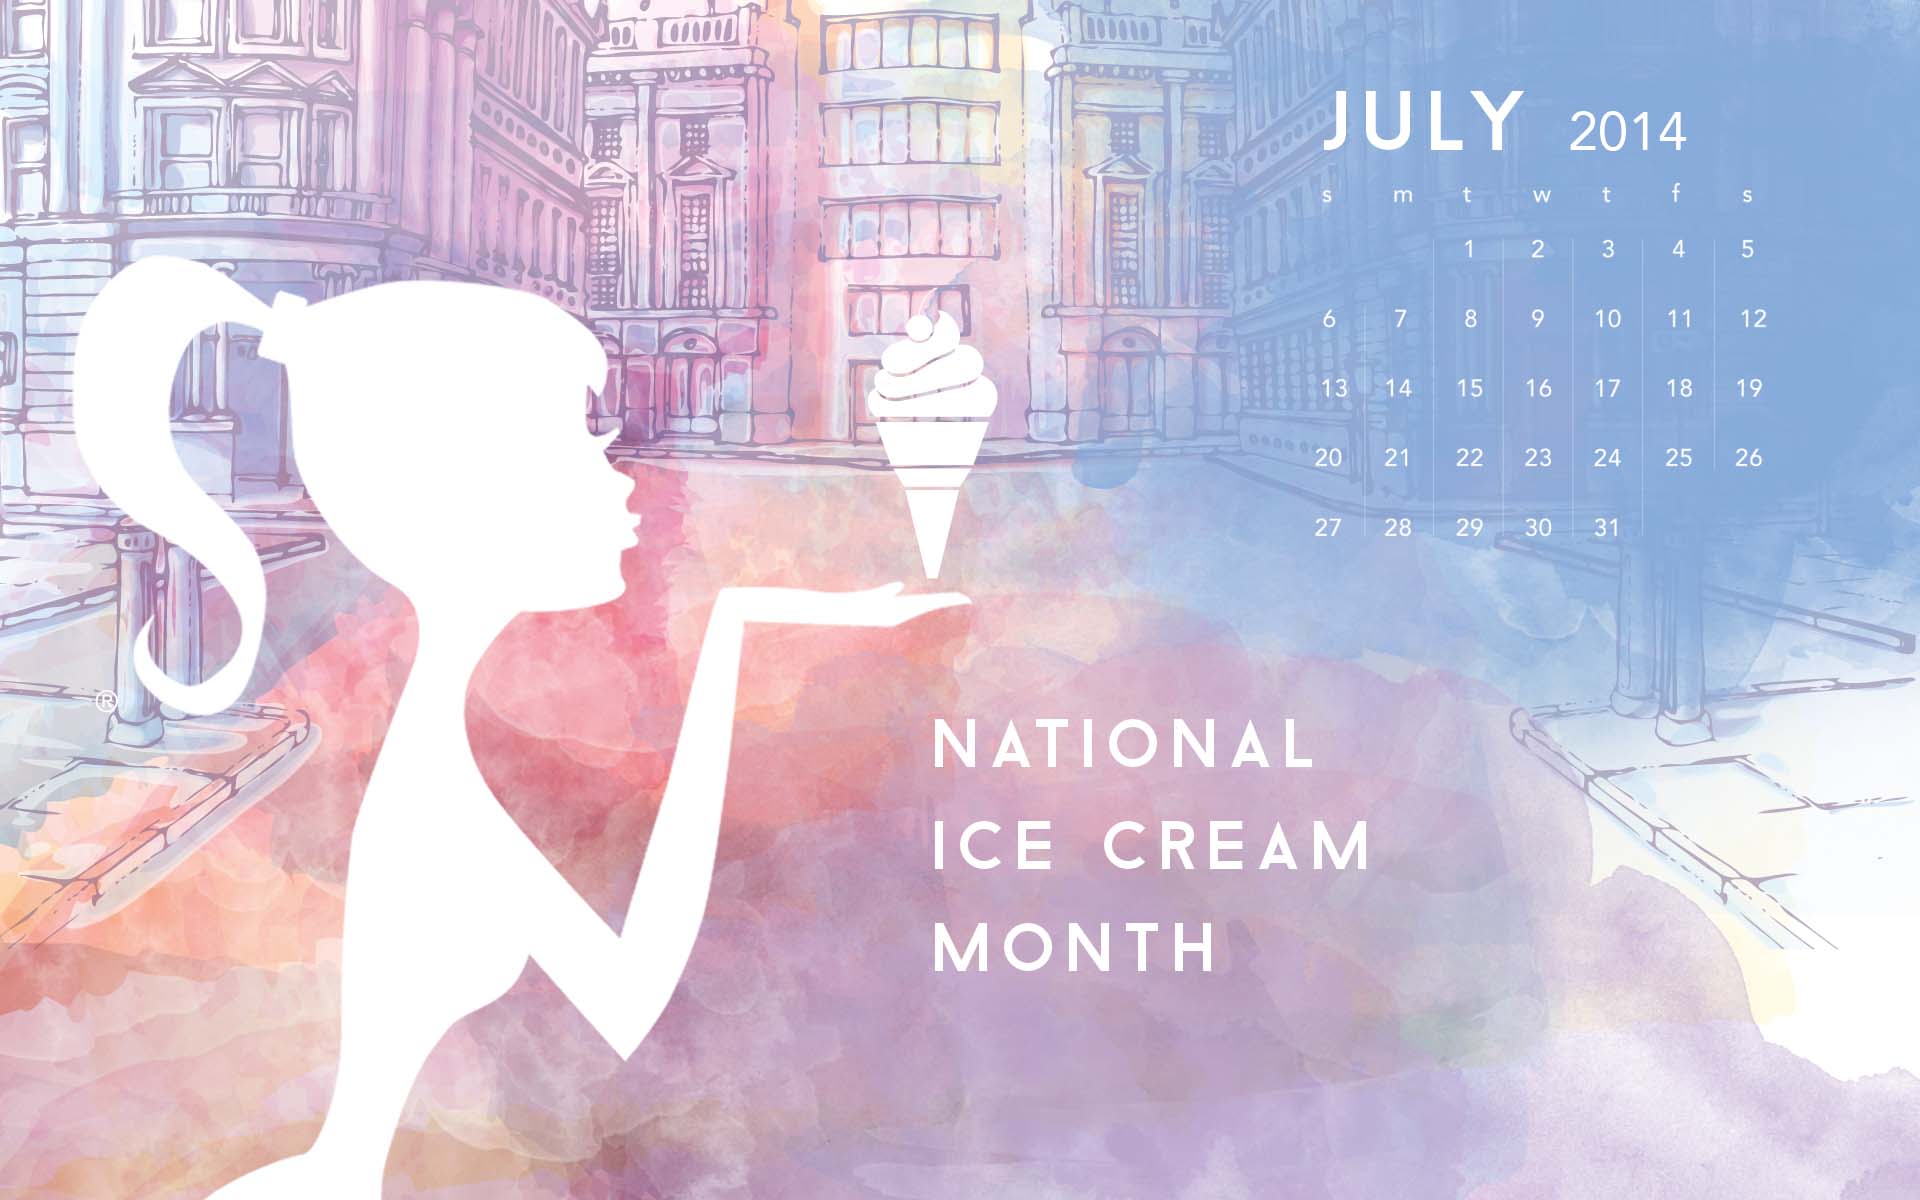 July 2014 free desktop wallpaper from missdetails.com - National Ice Cream Month!